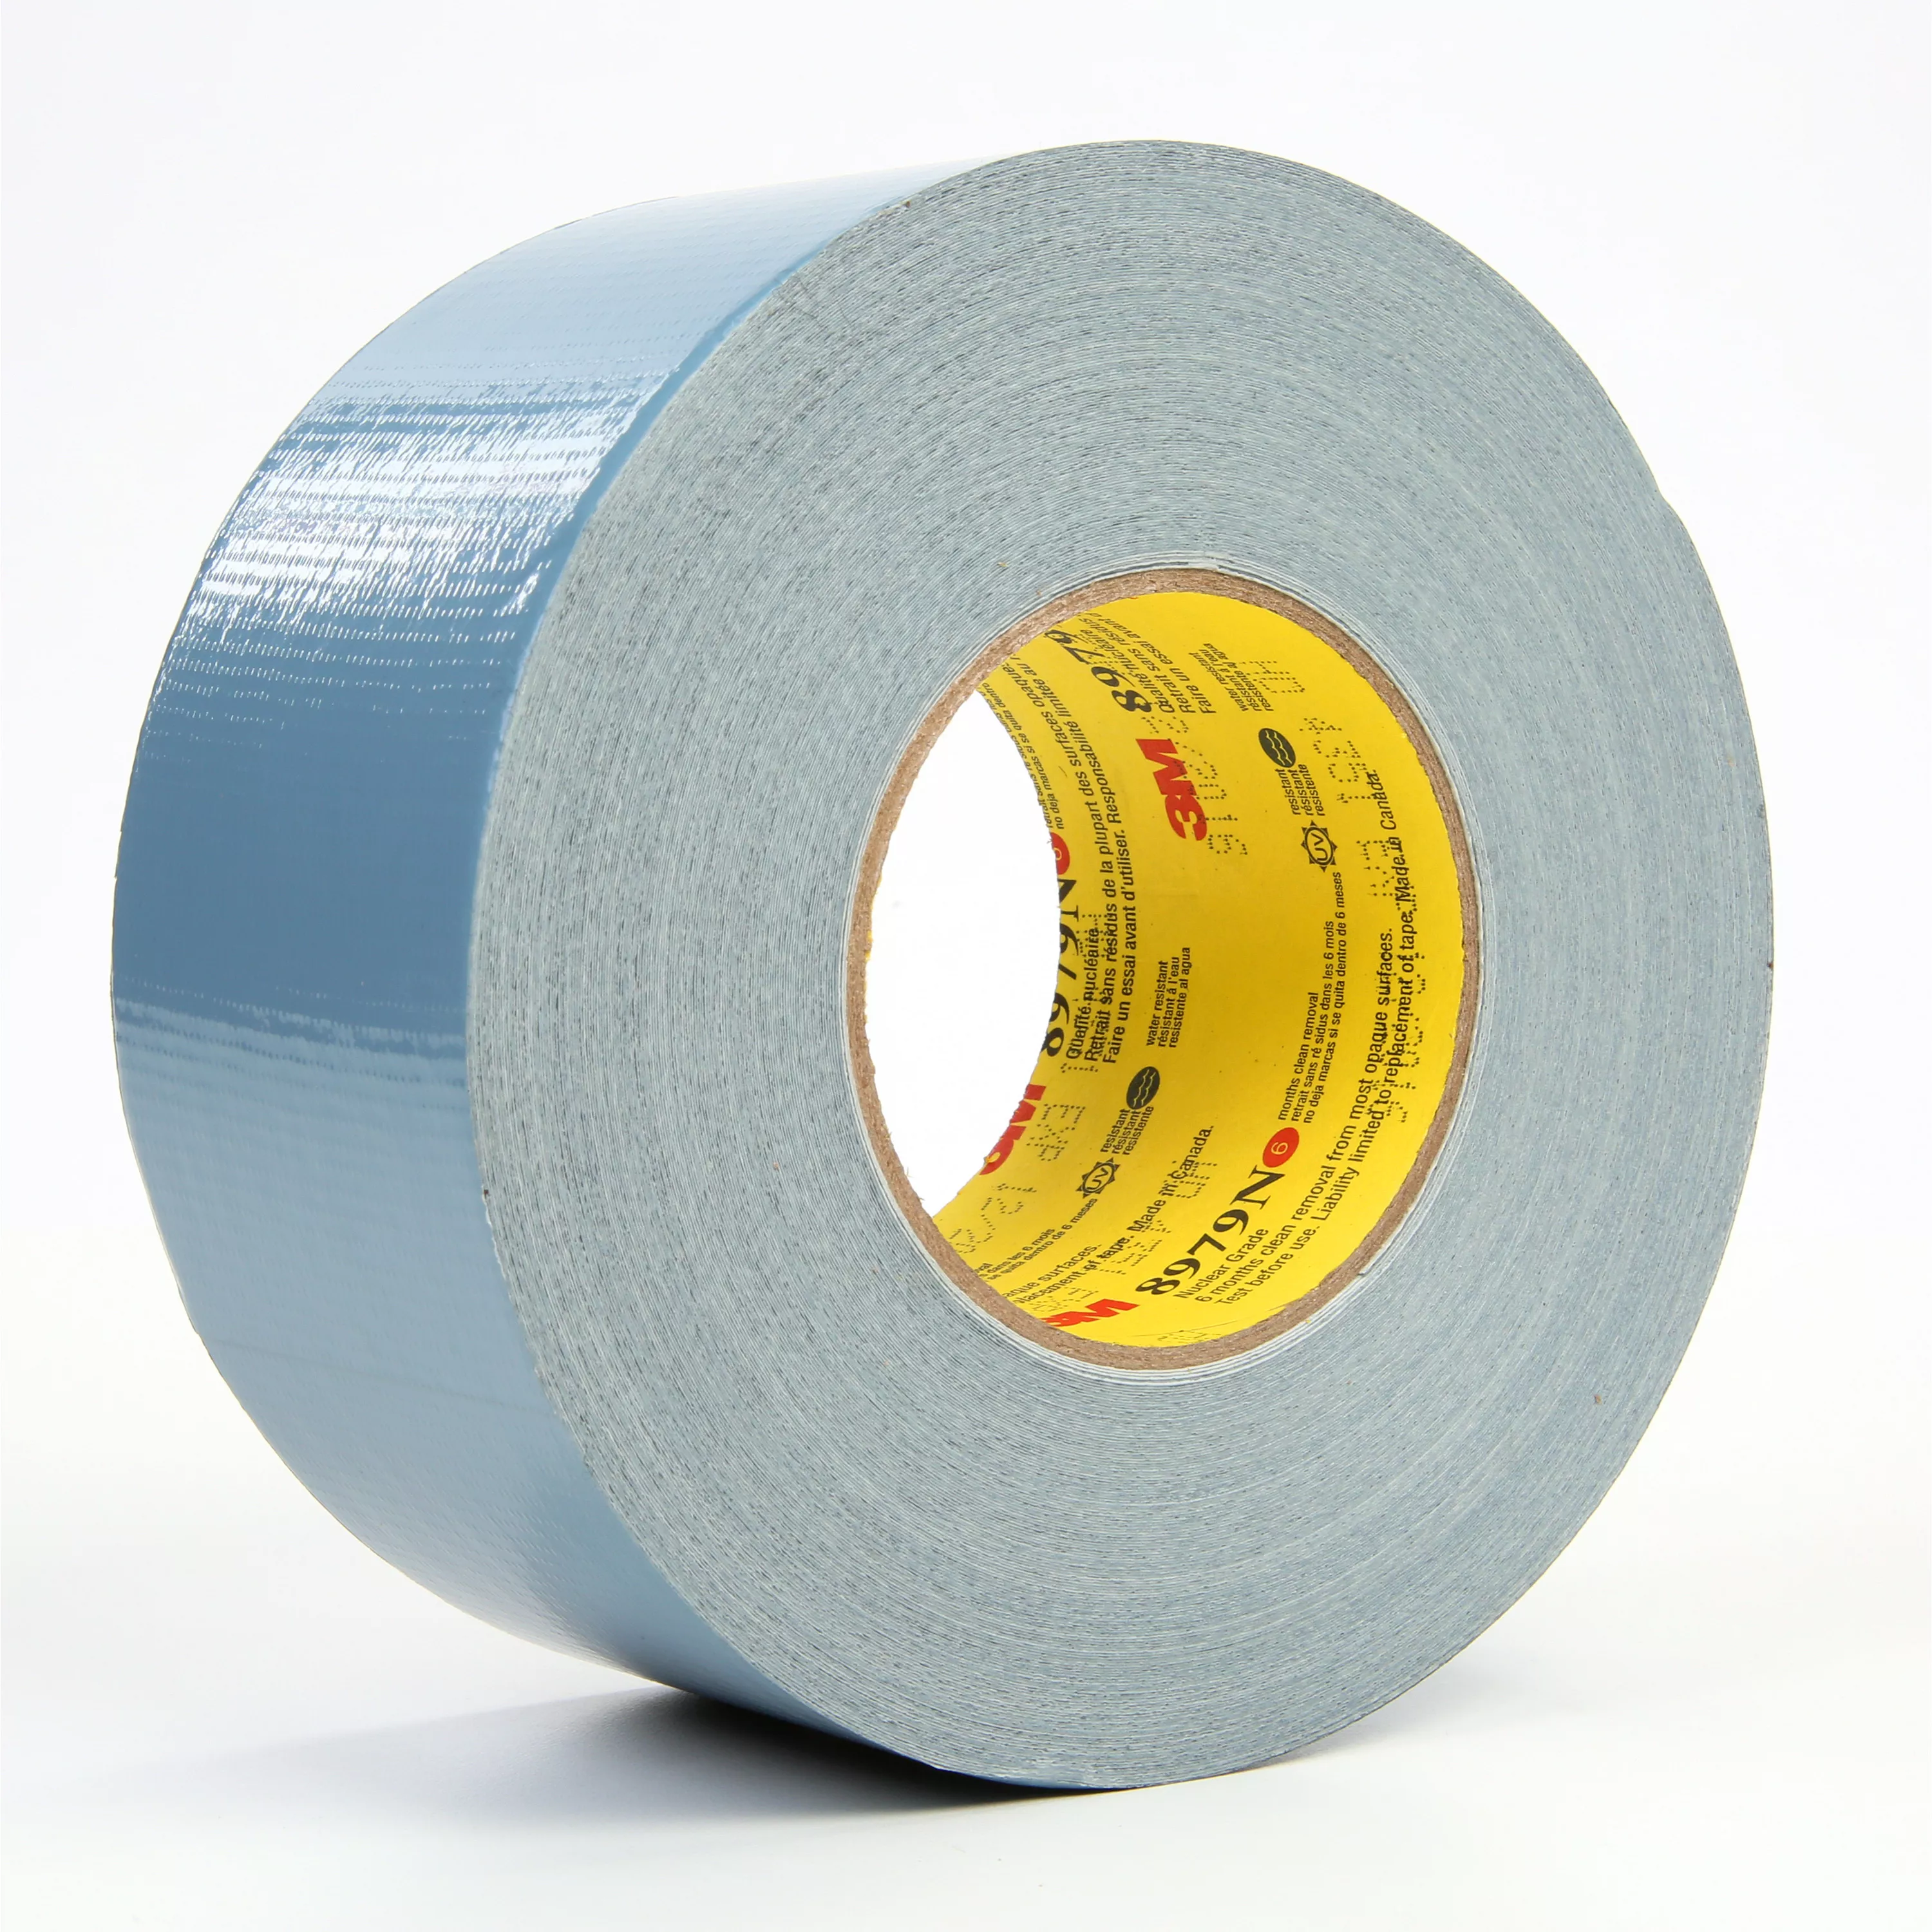 3M™ Performance Plus Duct Tape 8979N, Slate Blue, 48 mm x 54.8 m, 12.1
mil, 24 Roll/Case